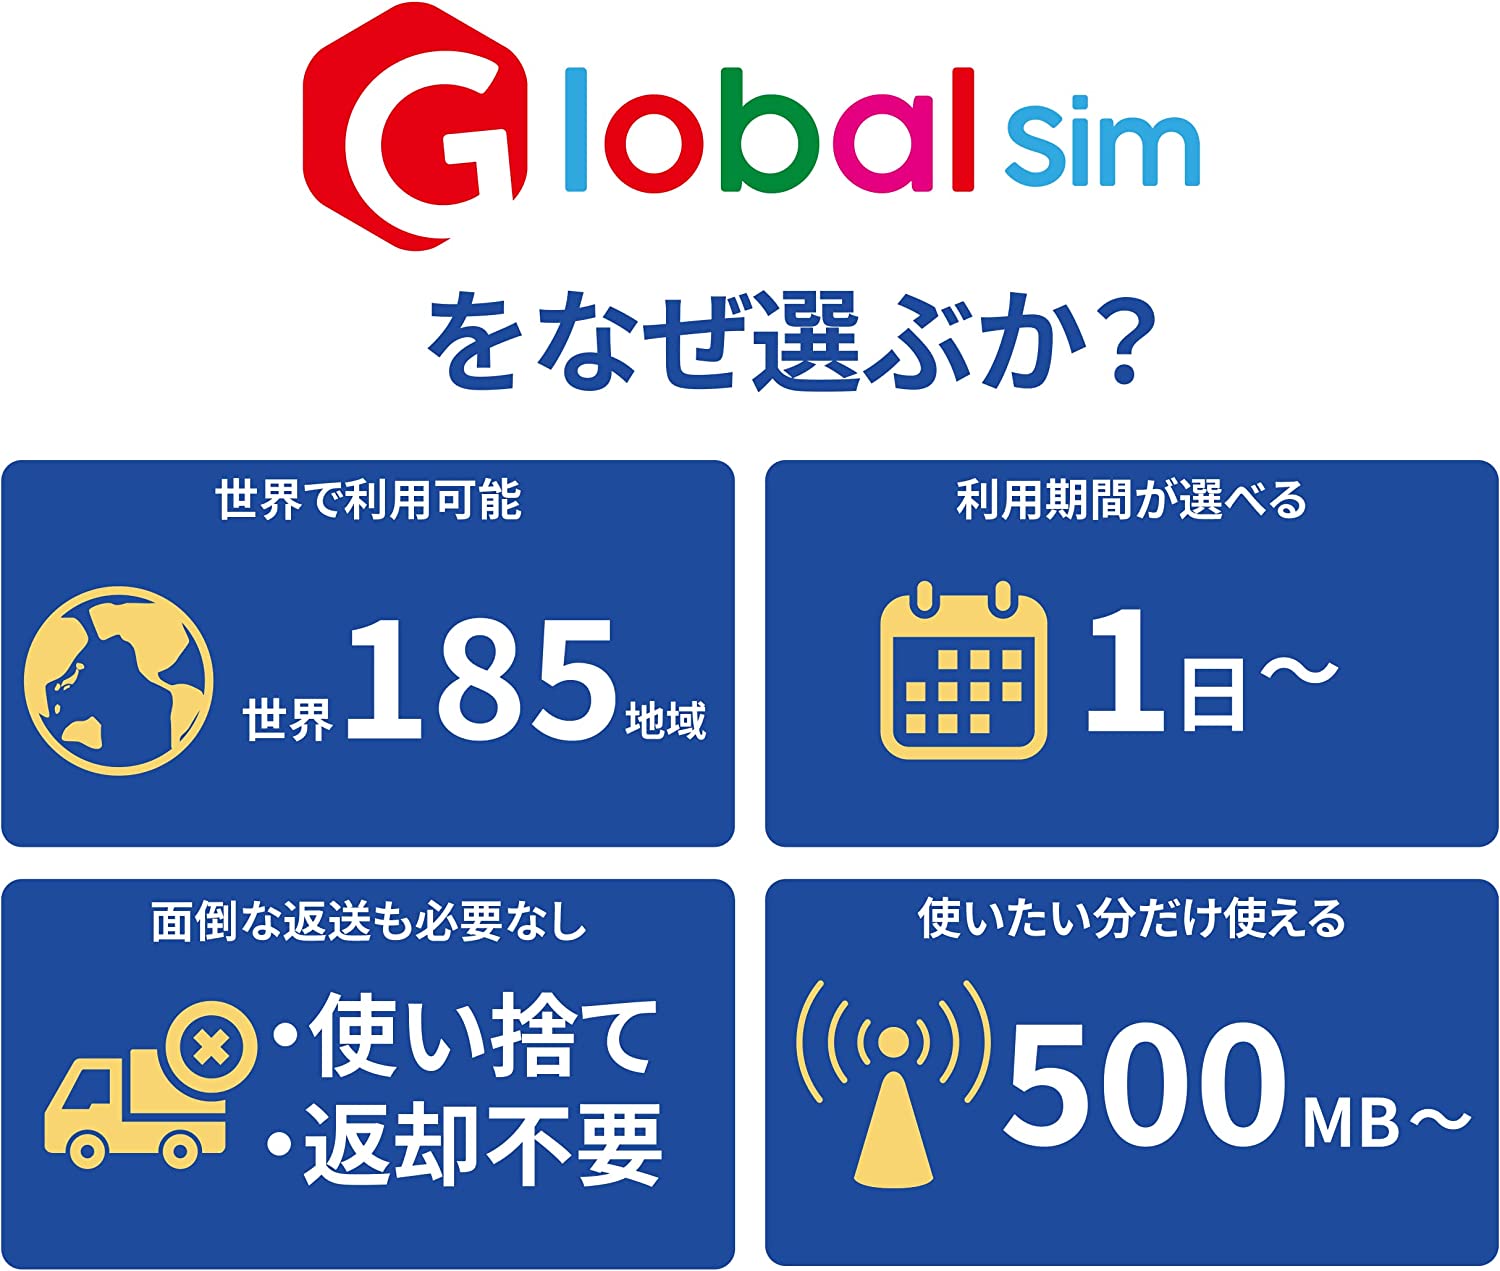 GLOBAL SIM シンガポール マレーシア タイ 5日間 データ無制限 (2GB 日高速）（容量を使い切っても利用期間内は最大384kbps） データ通信専用 シムフリー端末のみ対応 追加費用なし・契約不要